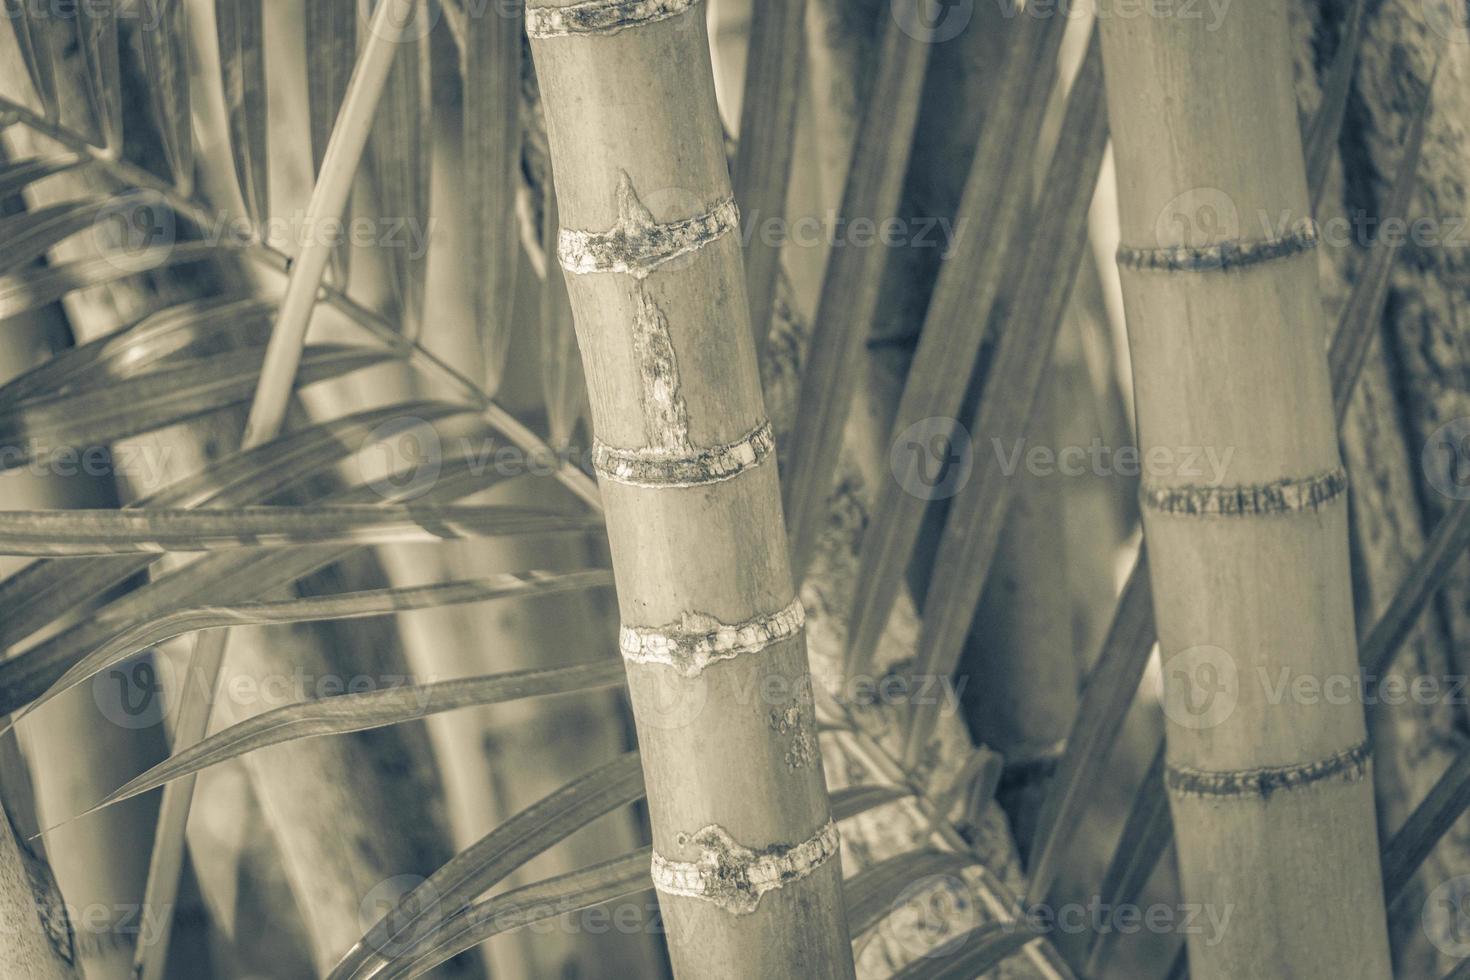 palmeiras de bambu verde amarelo rio de janeiro brasil. foto